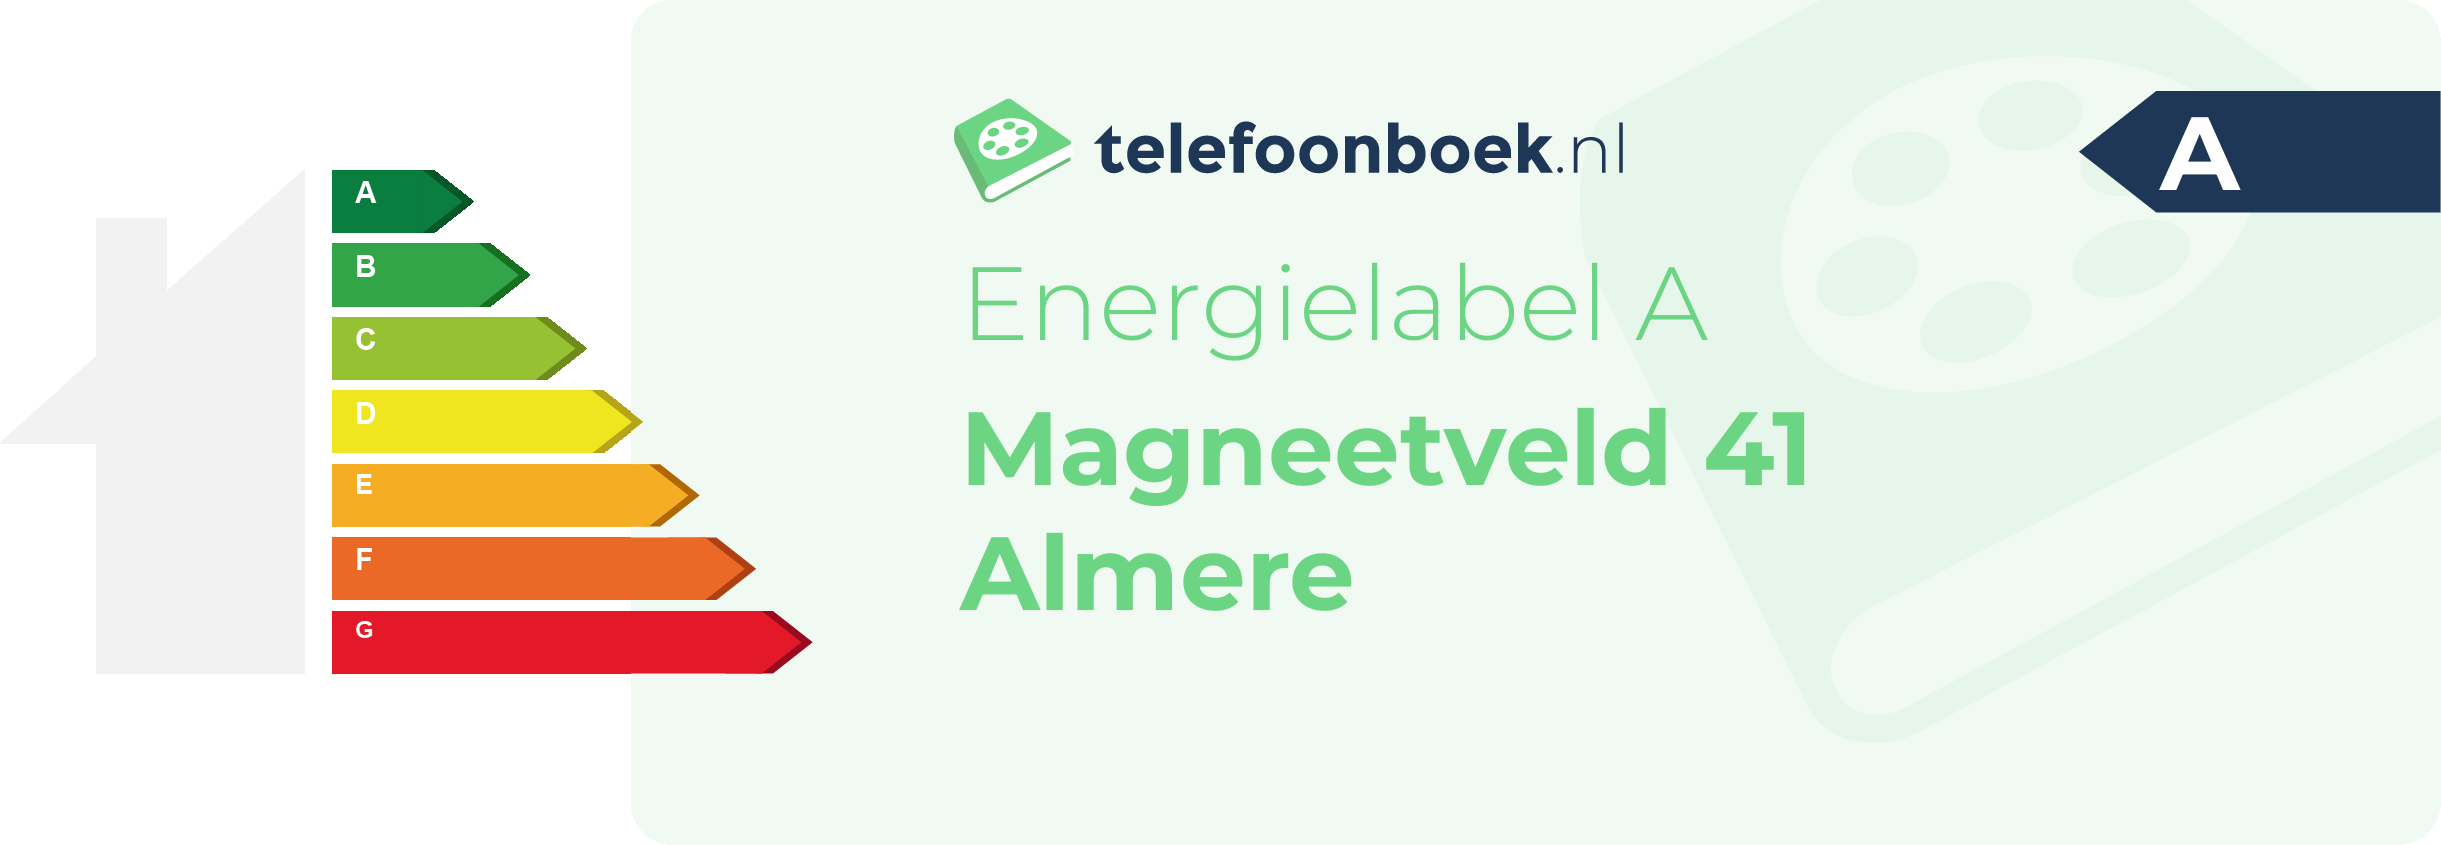 Energielabel Magneetveld 41 Almere